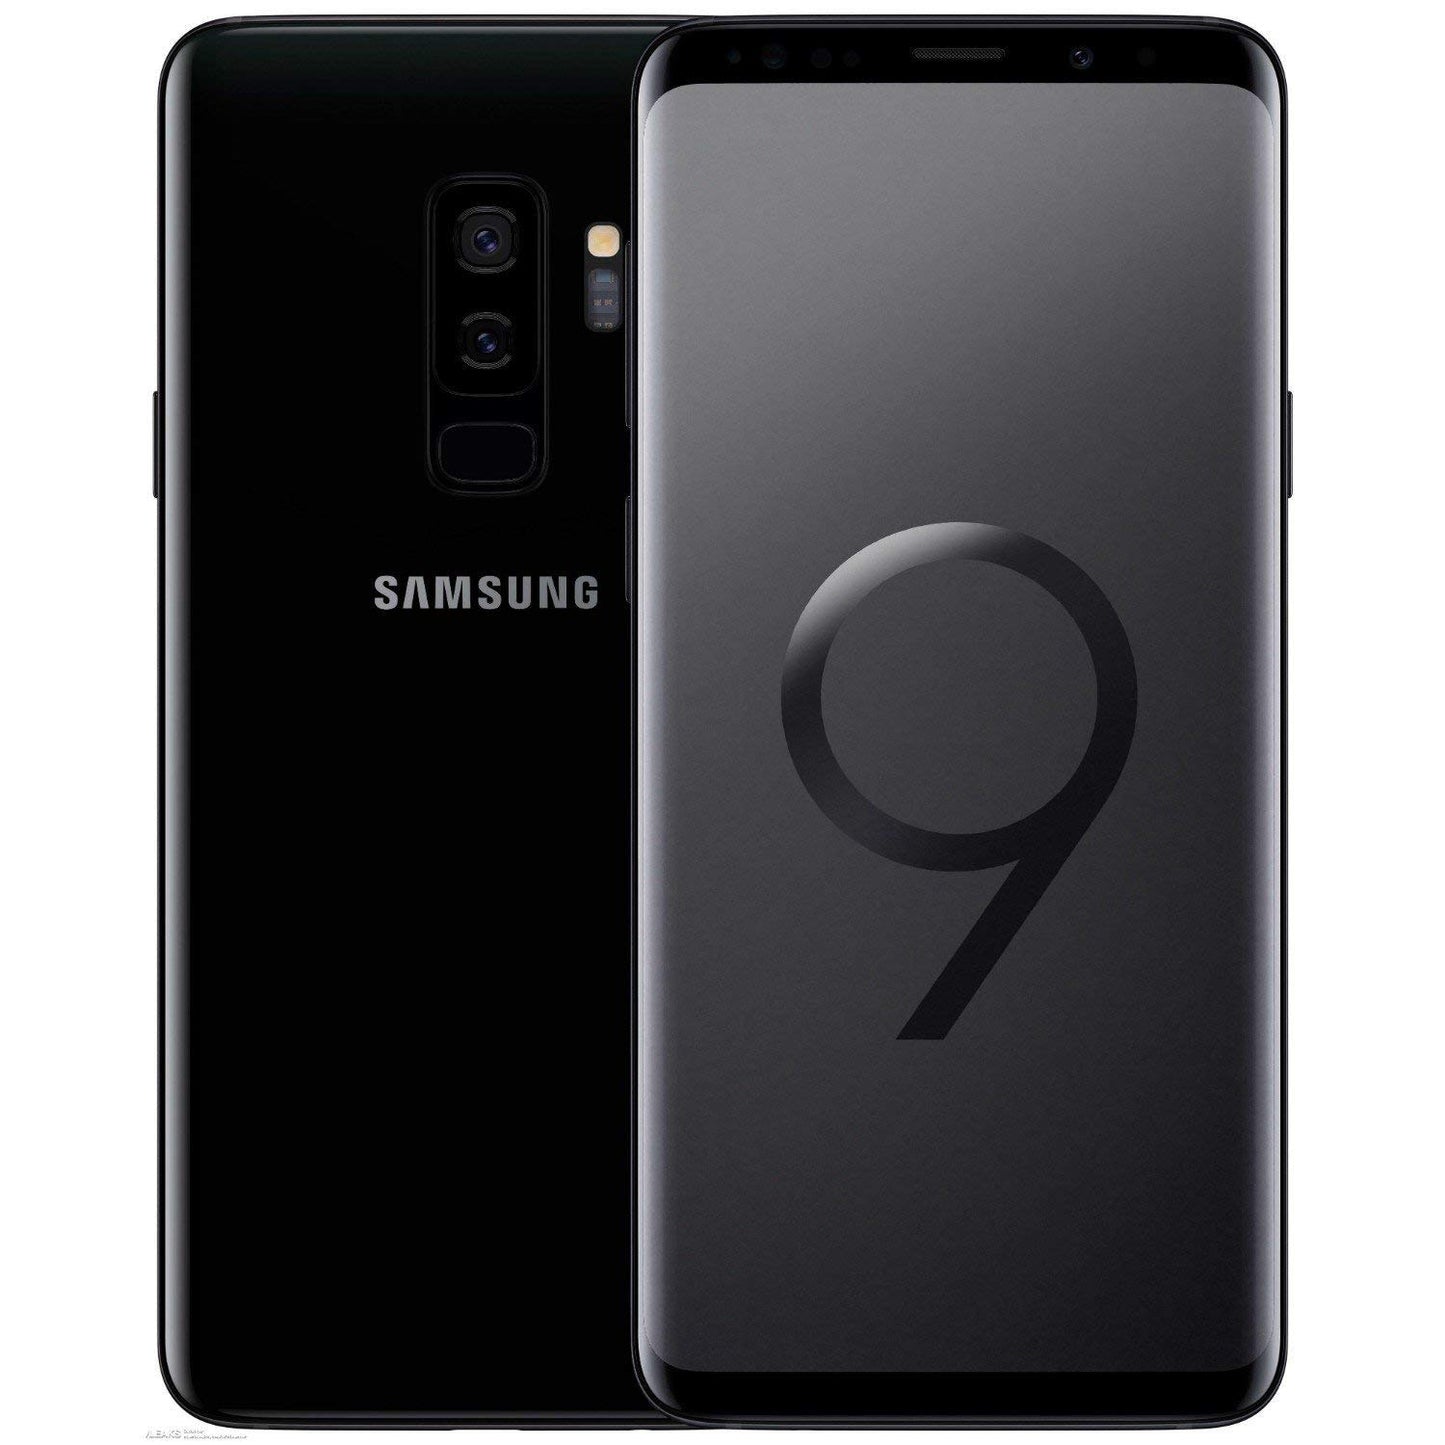 Samsung Galaxy S9+ Dual SIM - 64GB, 6GB RAM, 4G LTE, Midnight Black - (UAE Version)